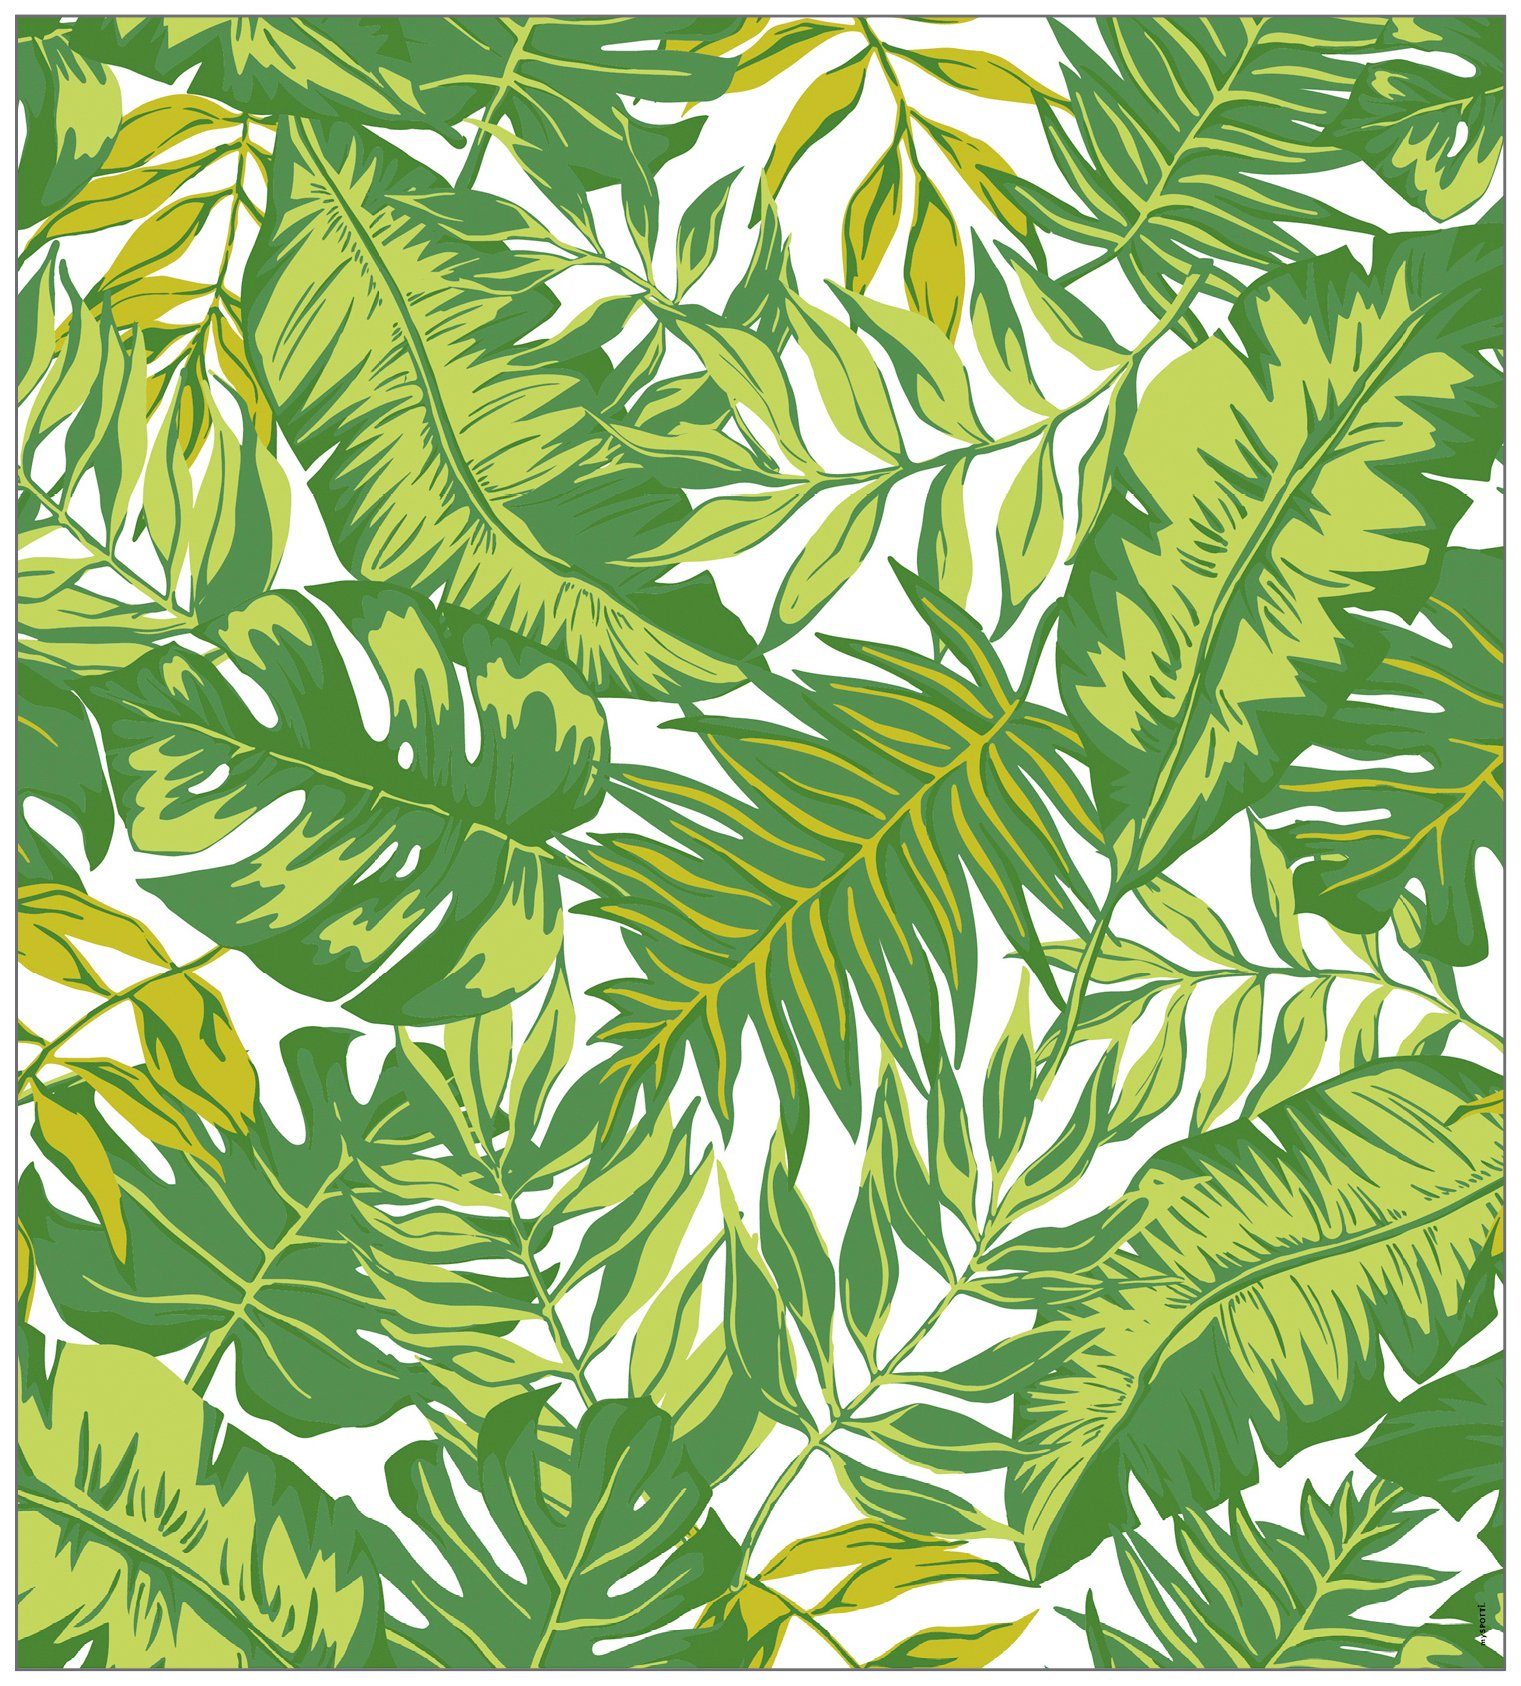 Fensterfolie Look Palm x MySpotti, haftend statisch glatt, green, halbtransparent, Leaves cm, 90 100